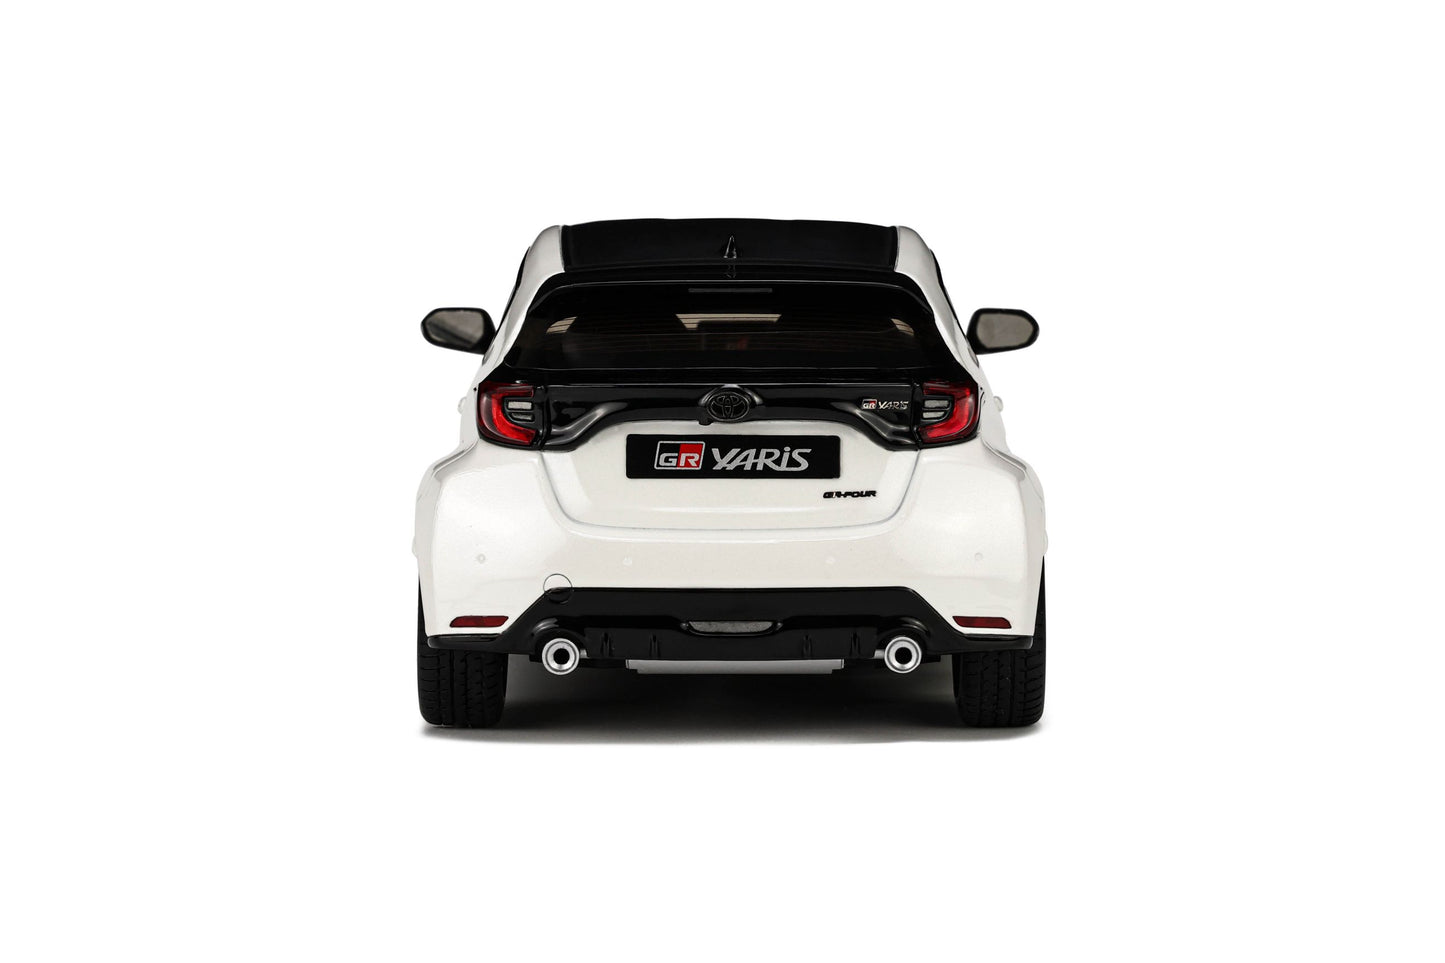 OttOmobile - Toyota GR Yaris (Platinum White Pearl) 1:18 Scale Model Car